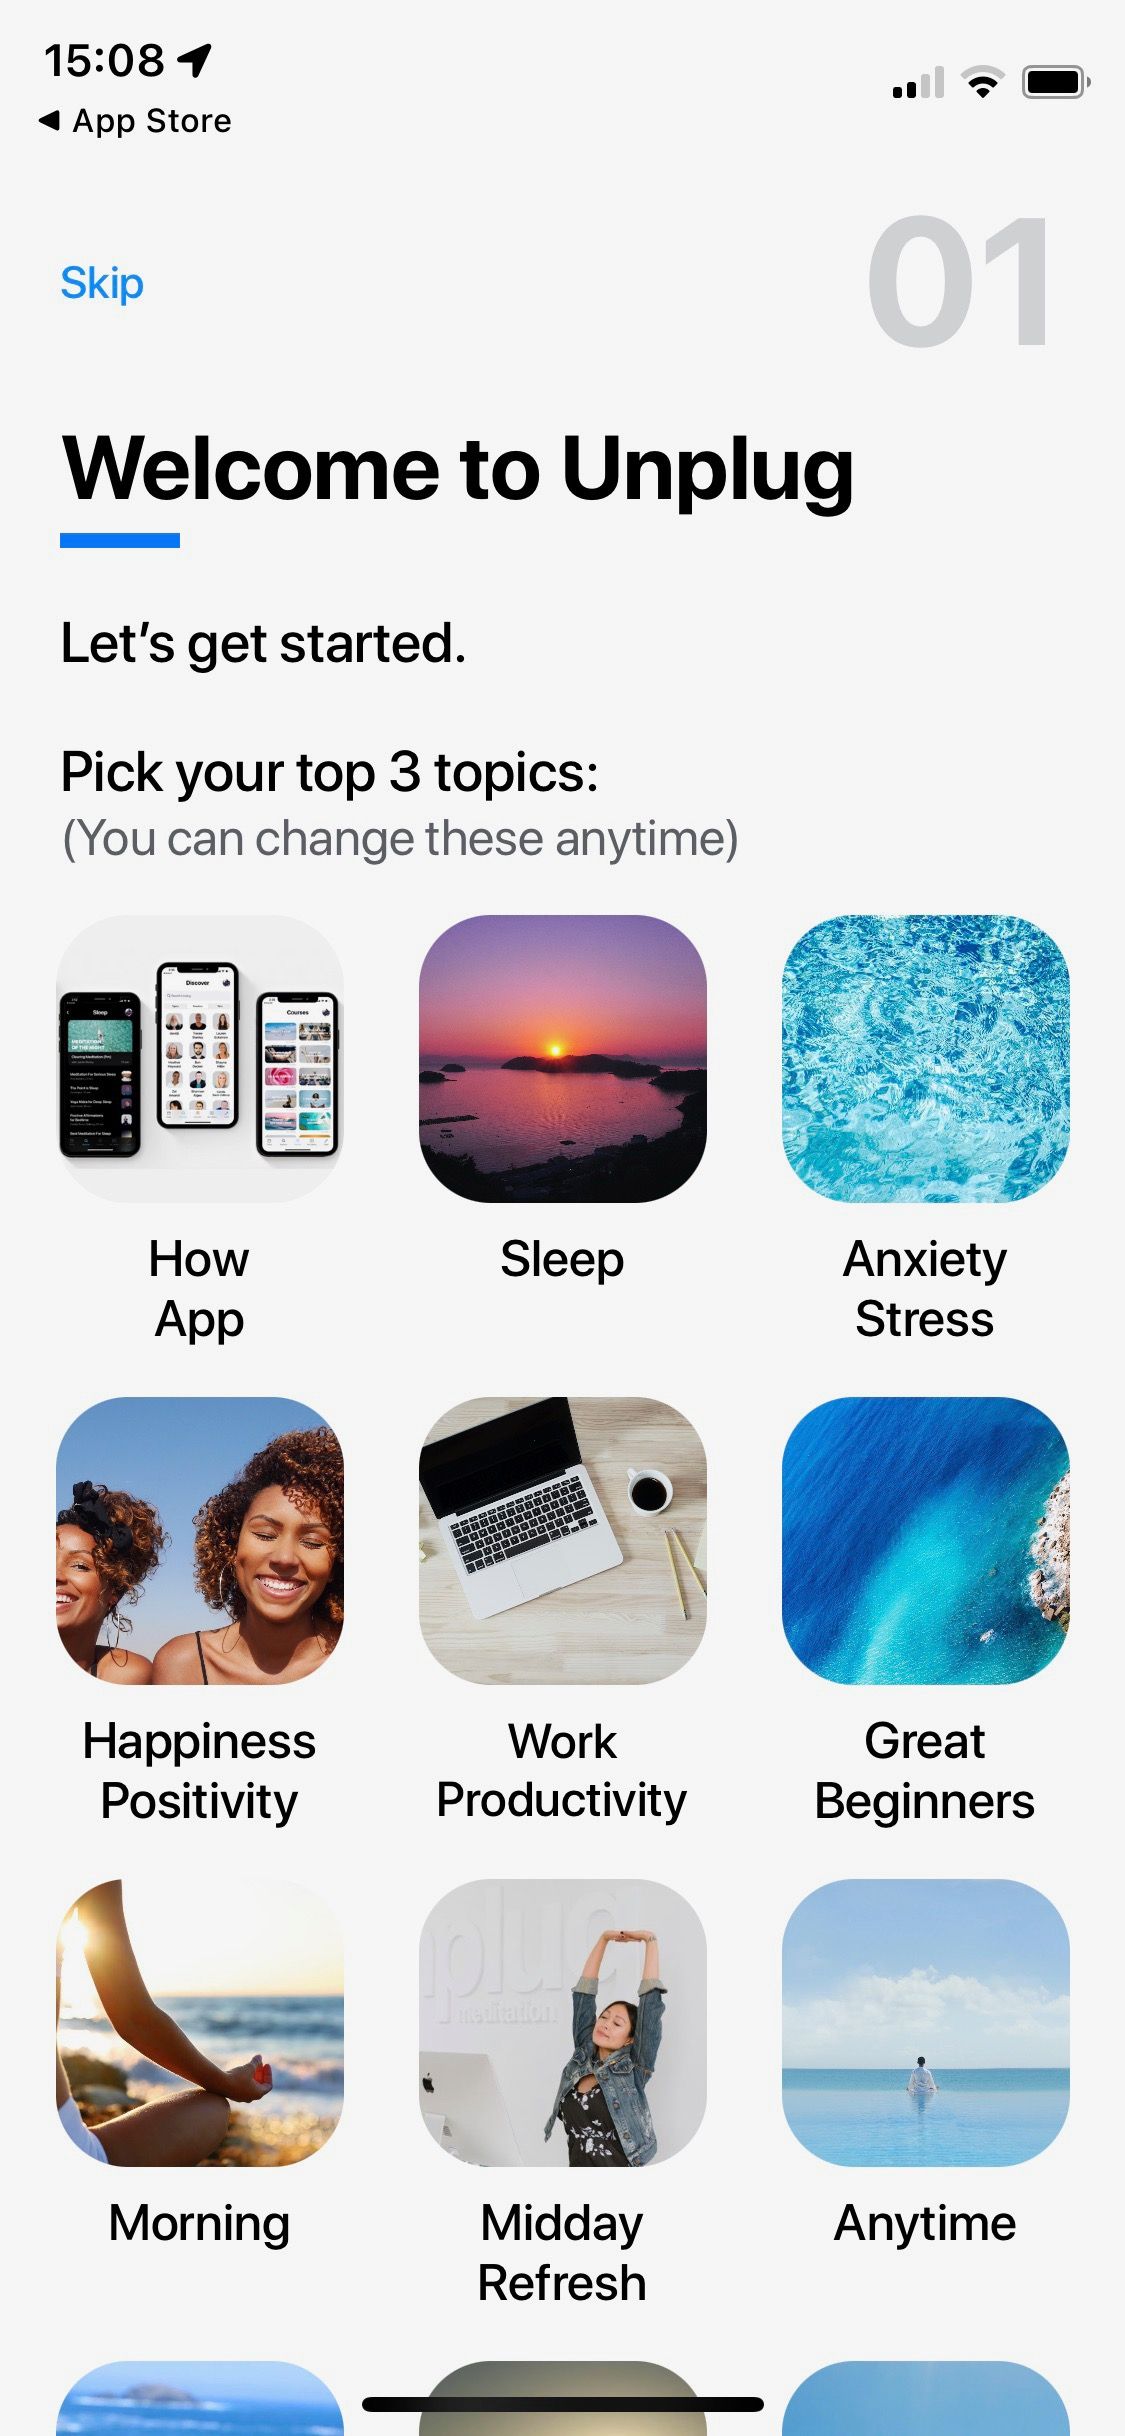 Screenshot of Unplug app showing welcome screen